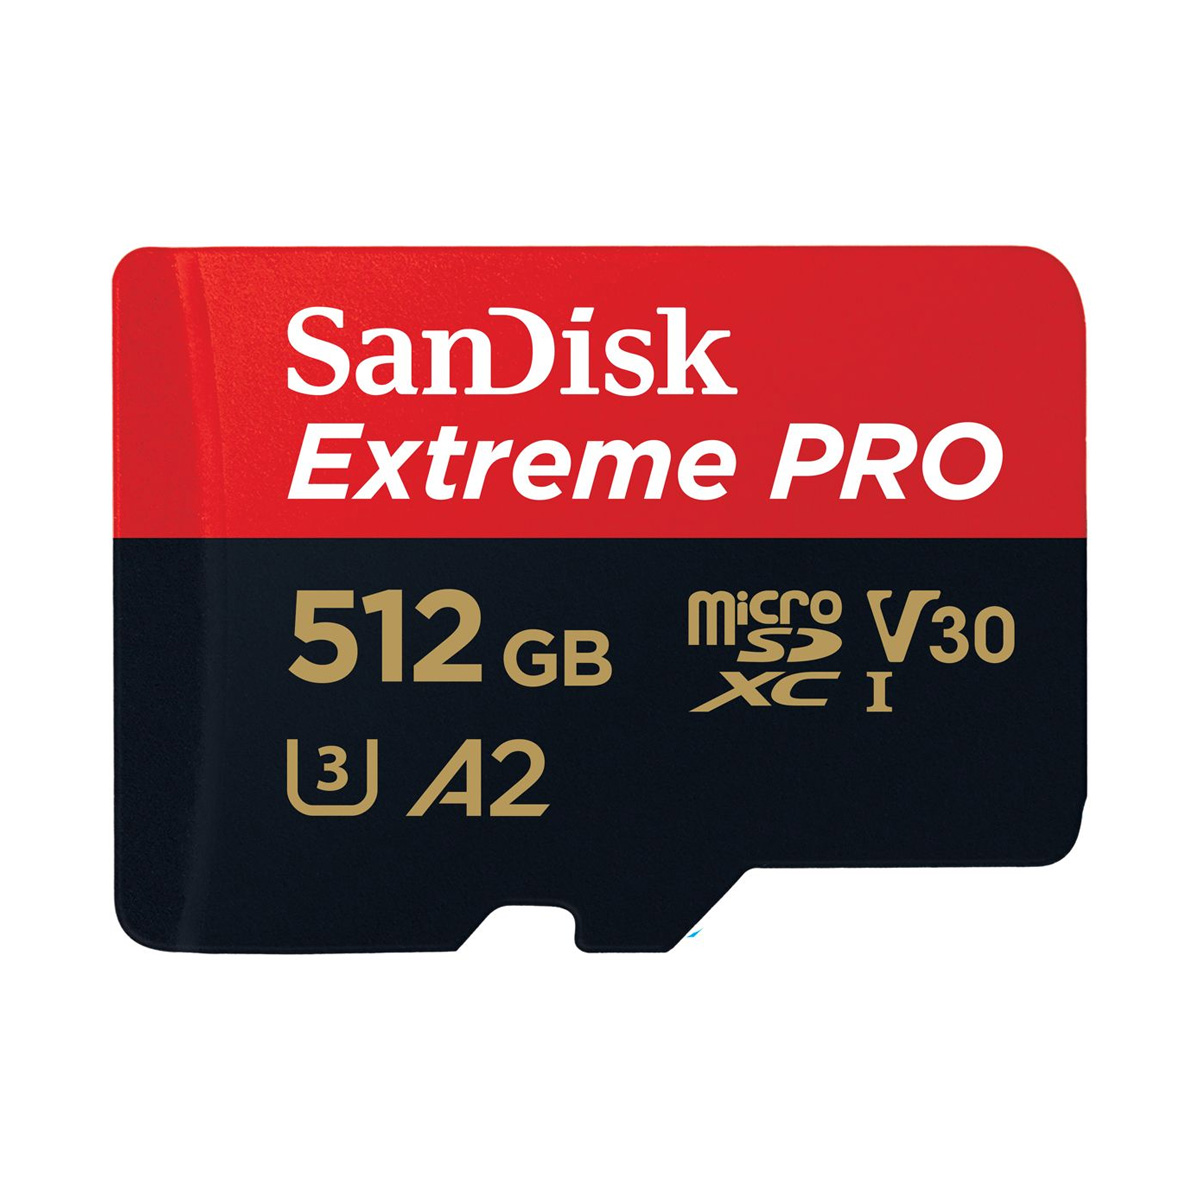 SANDISK 512 GB MICRO SDXC 200MB EXTREME PRO